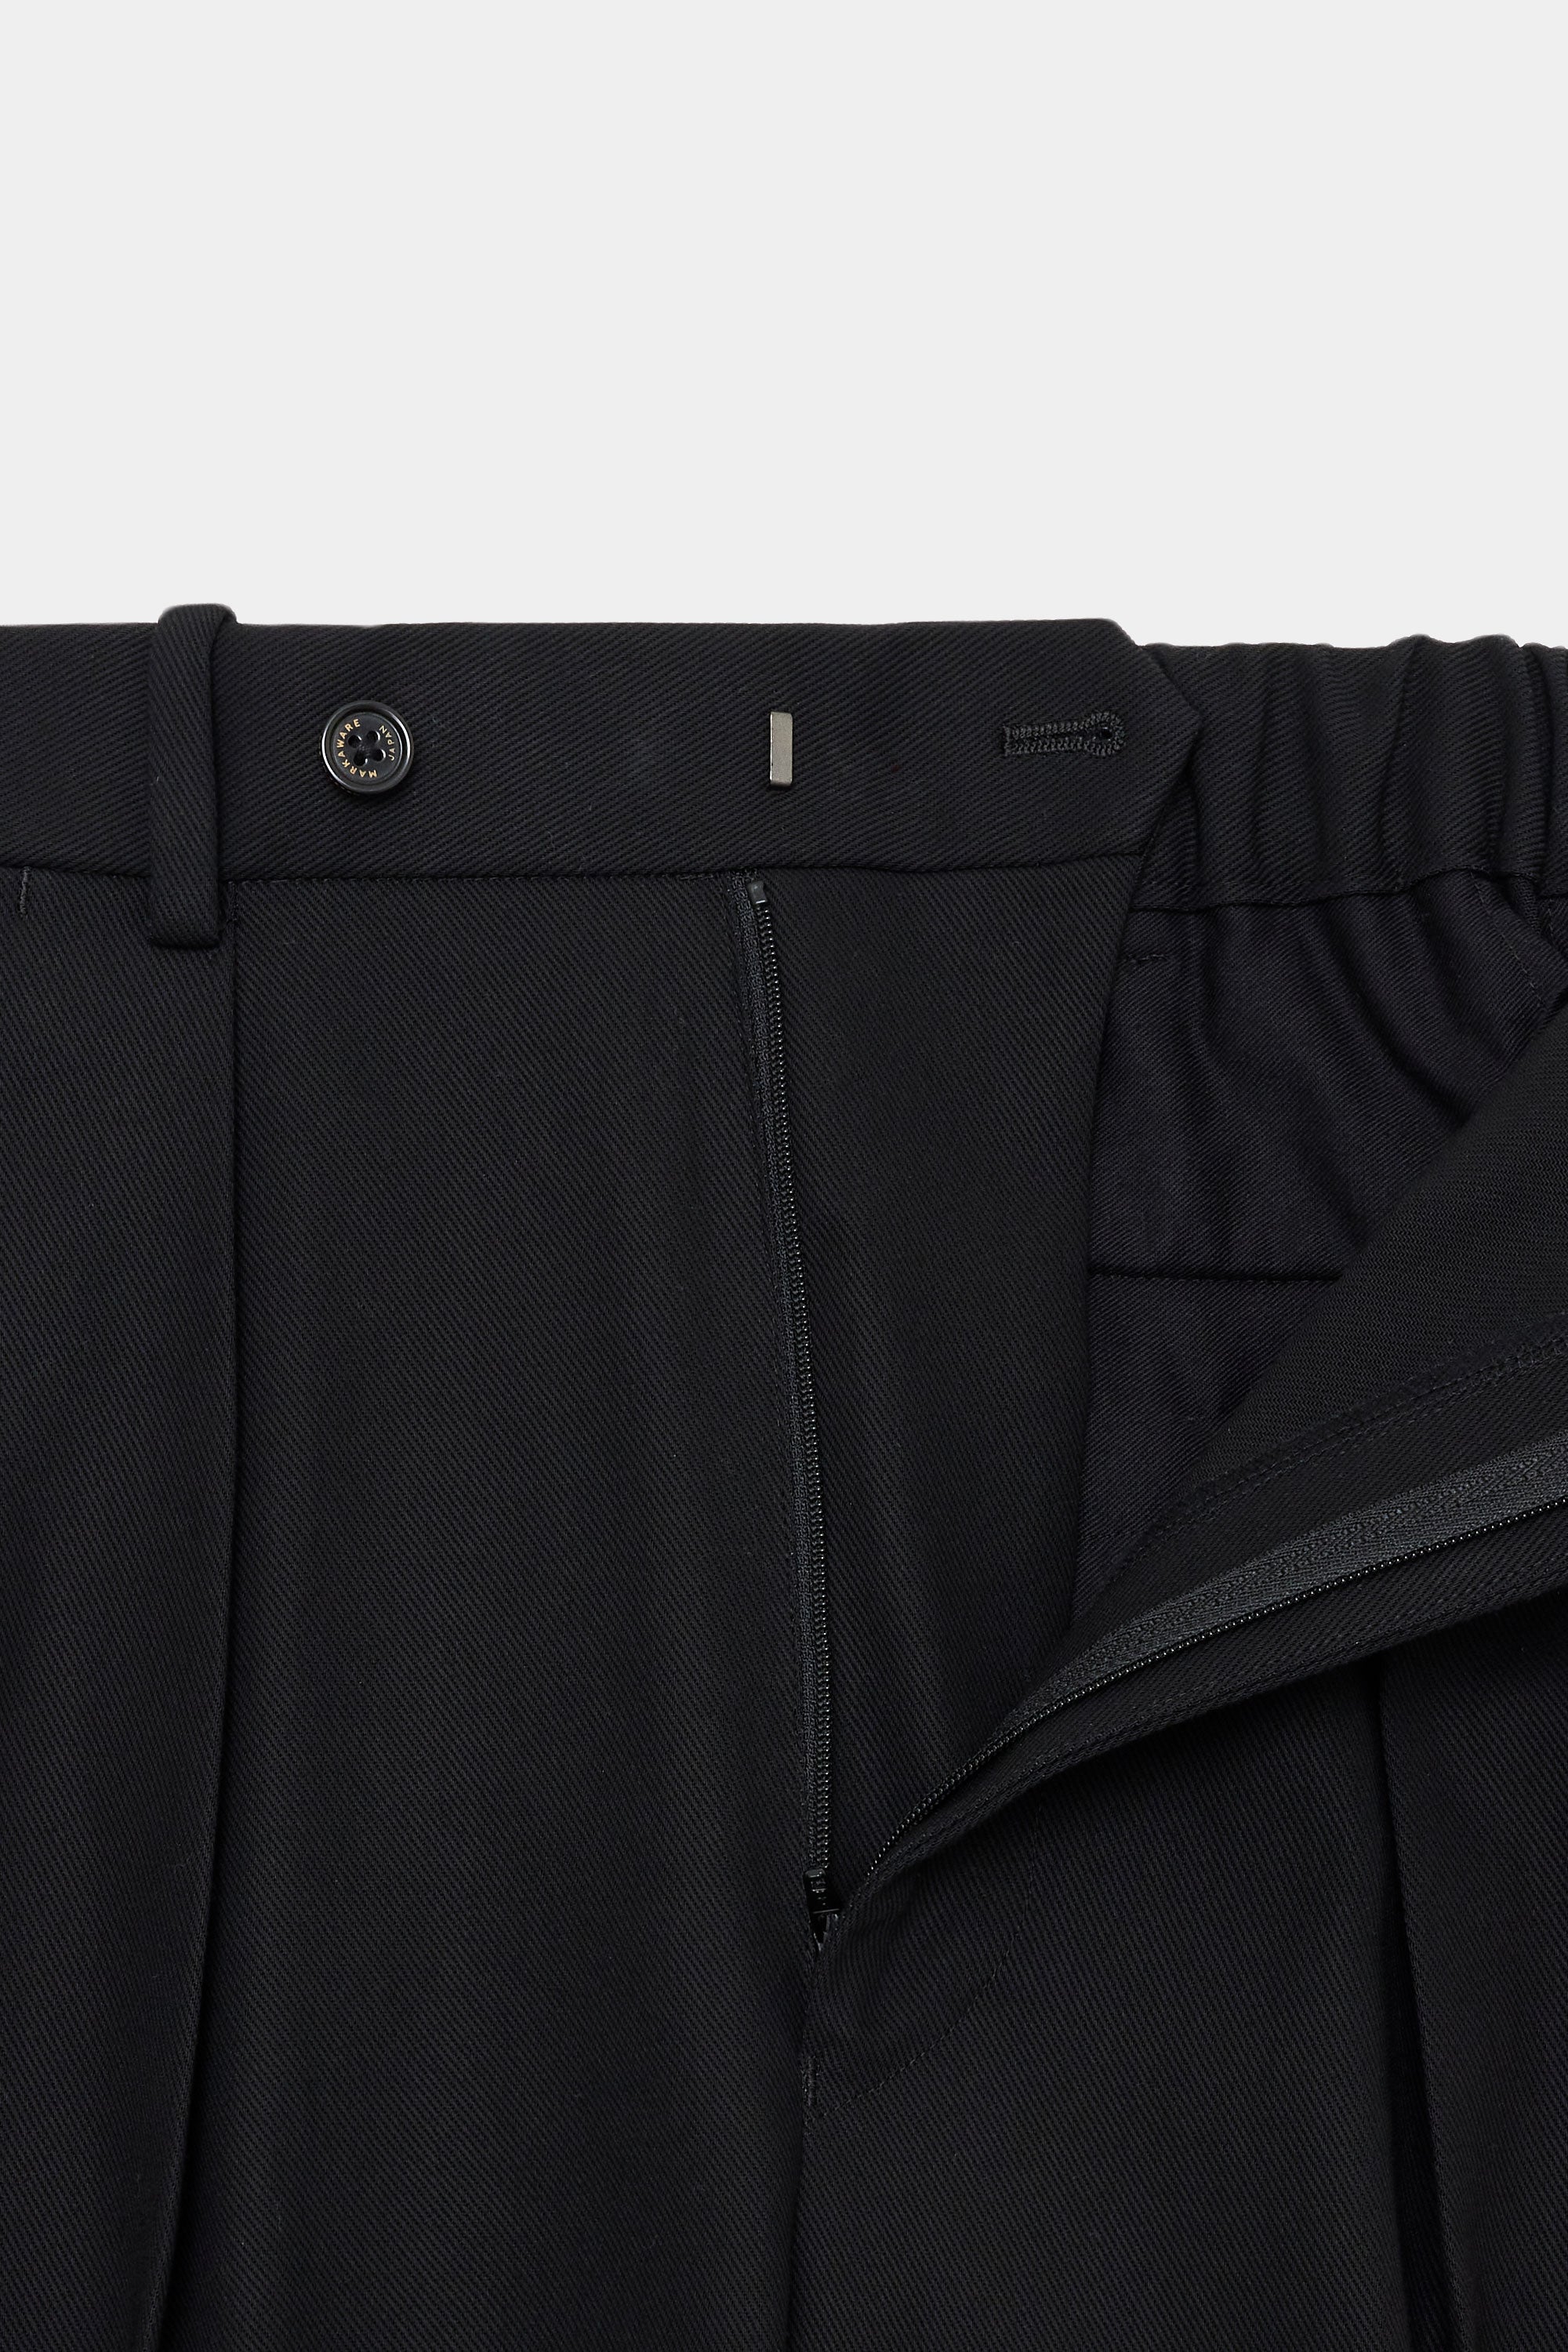 ORGANIC COTTON SURVIVAL CLOTH CLASSIC FIT TROUSERS, Black